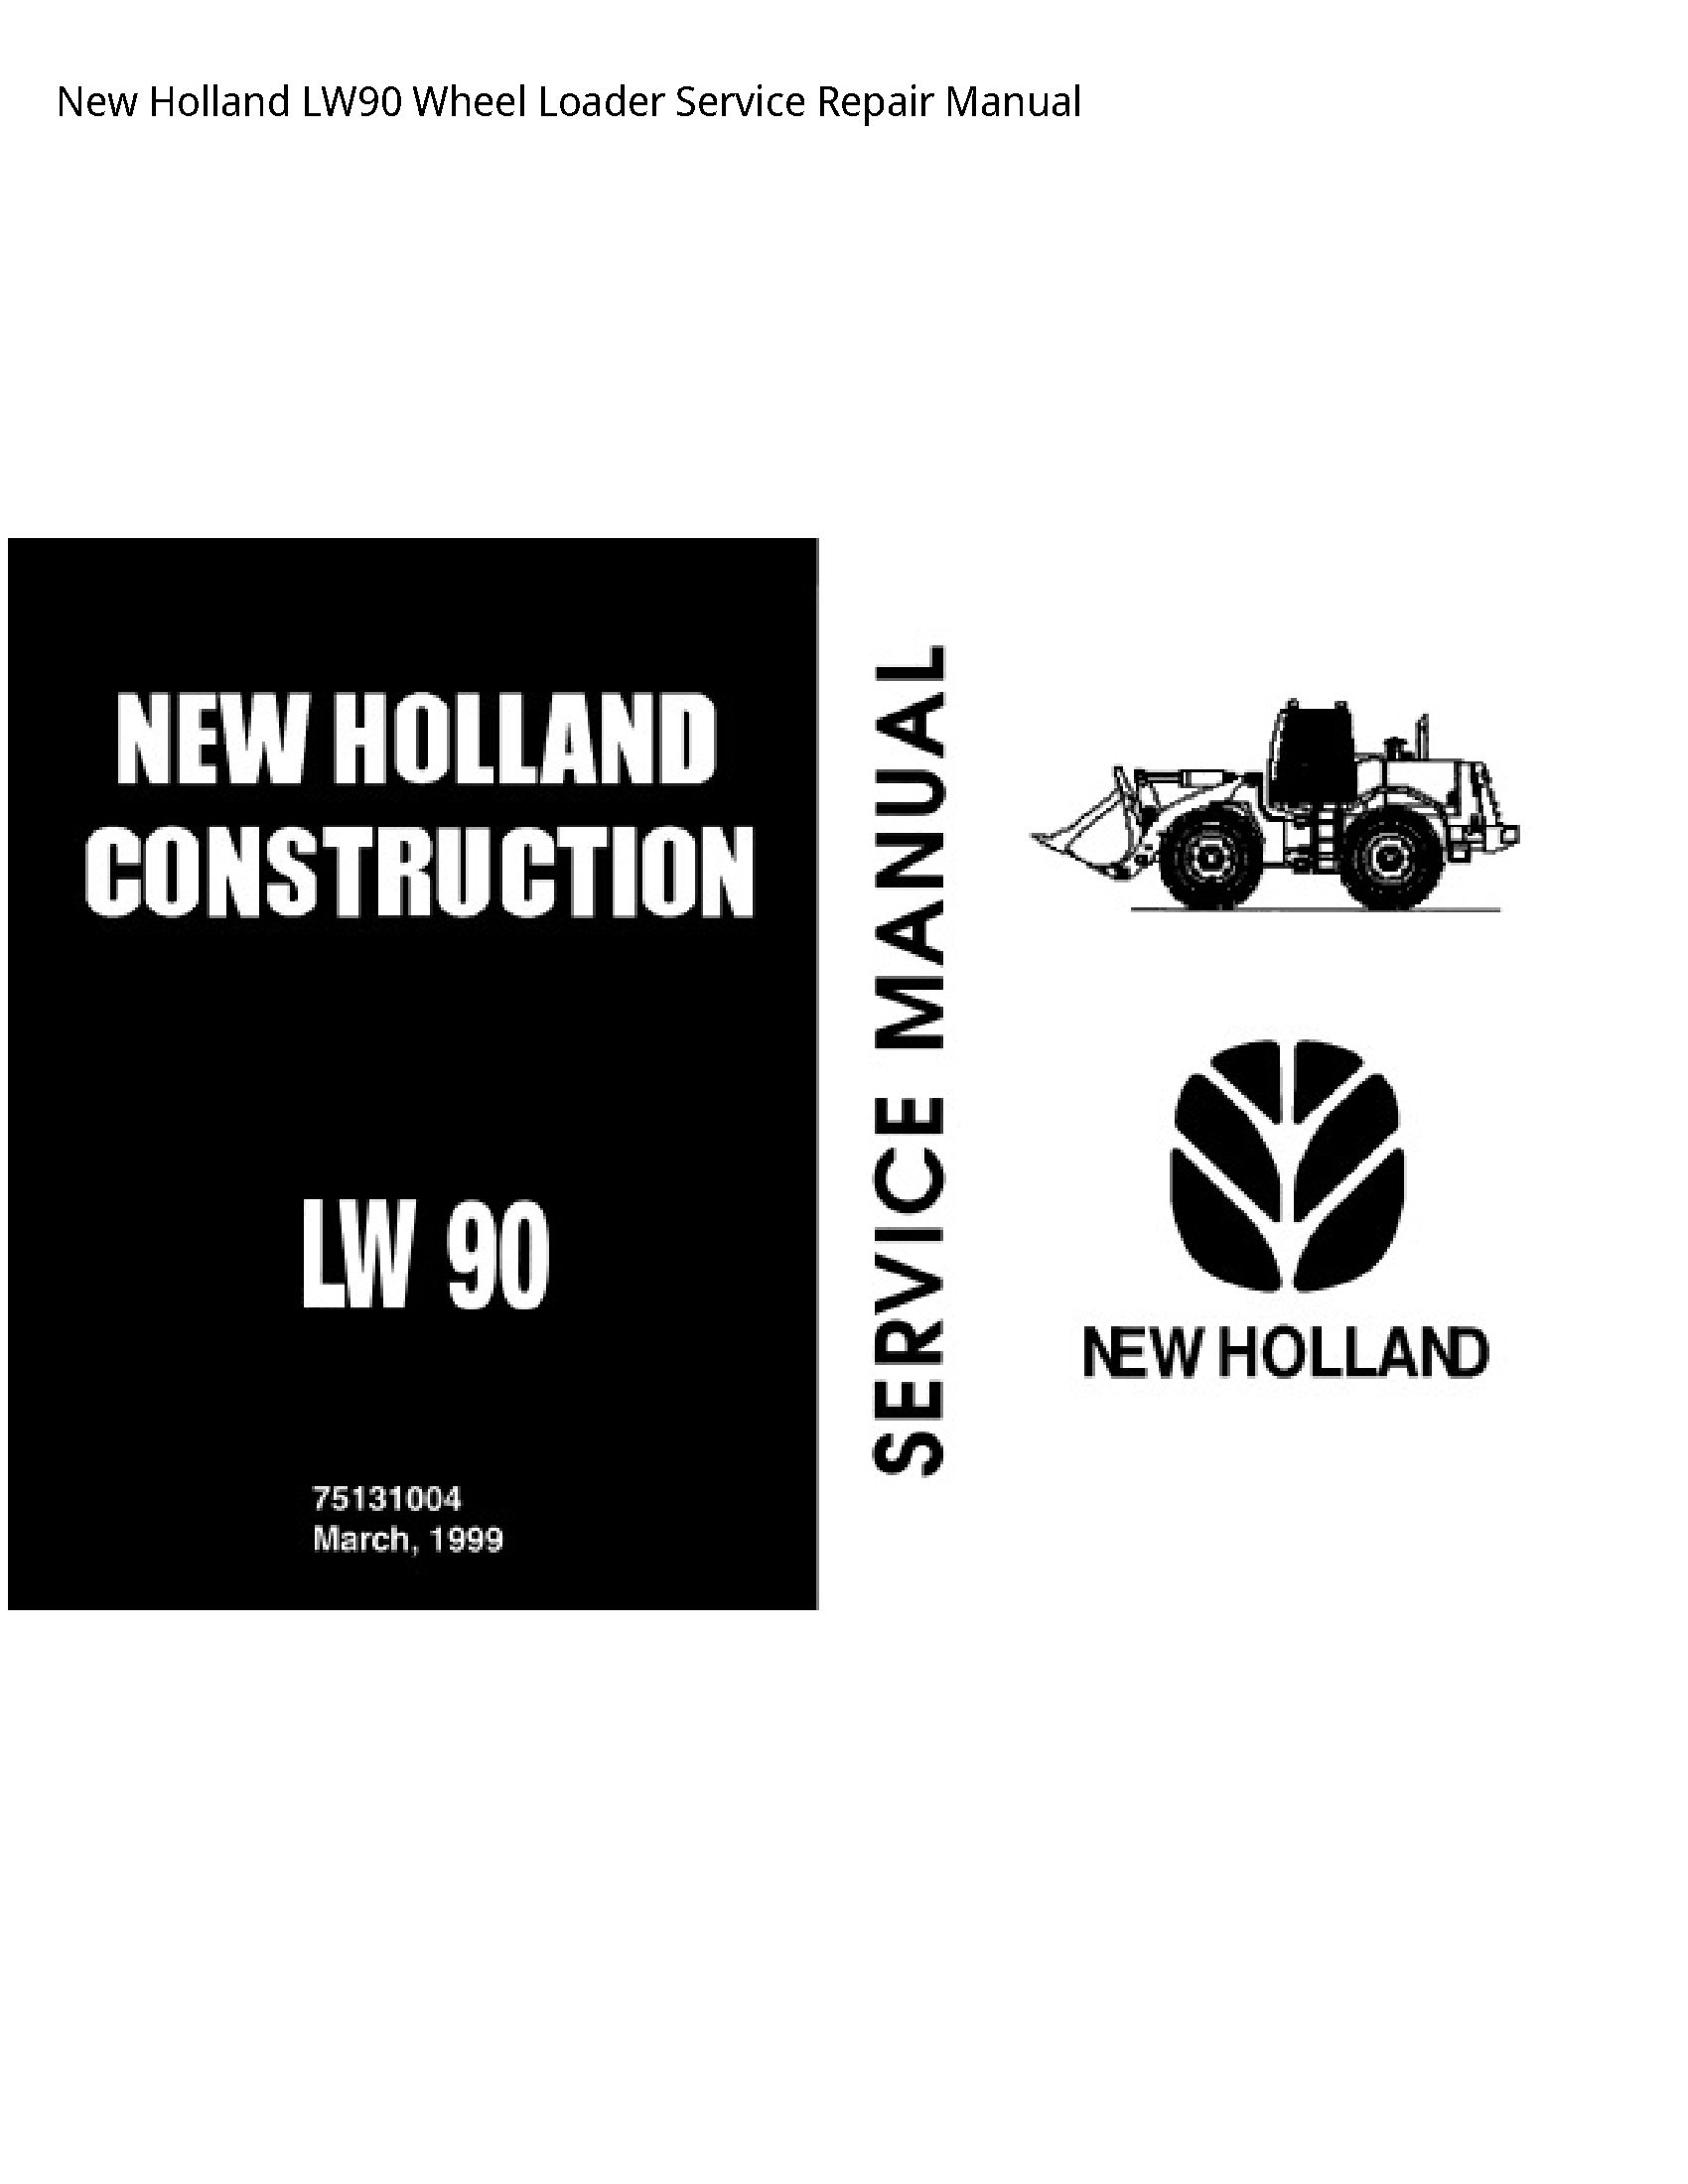 New Holland LW90 Wheel Loader manual